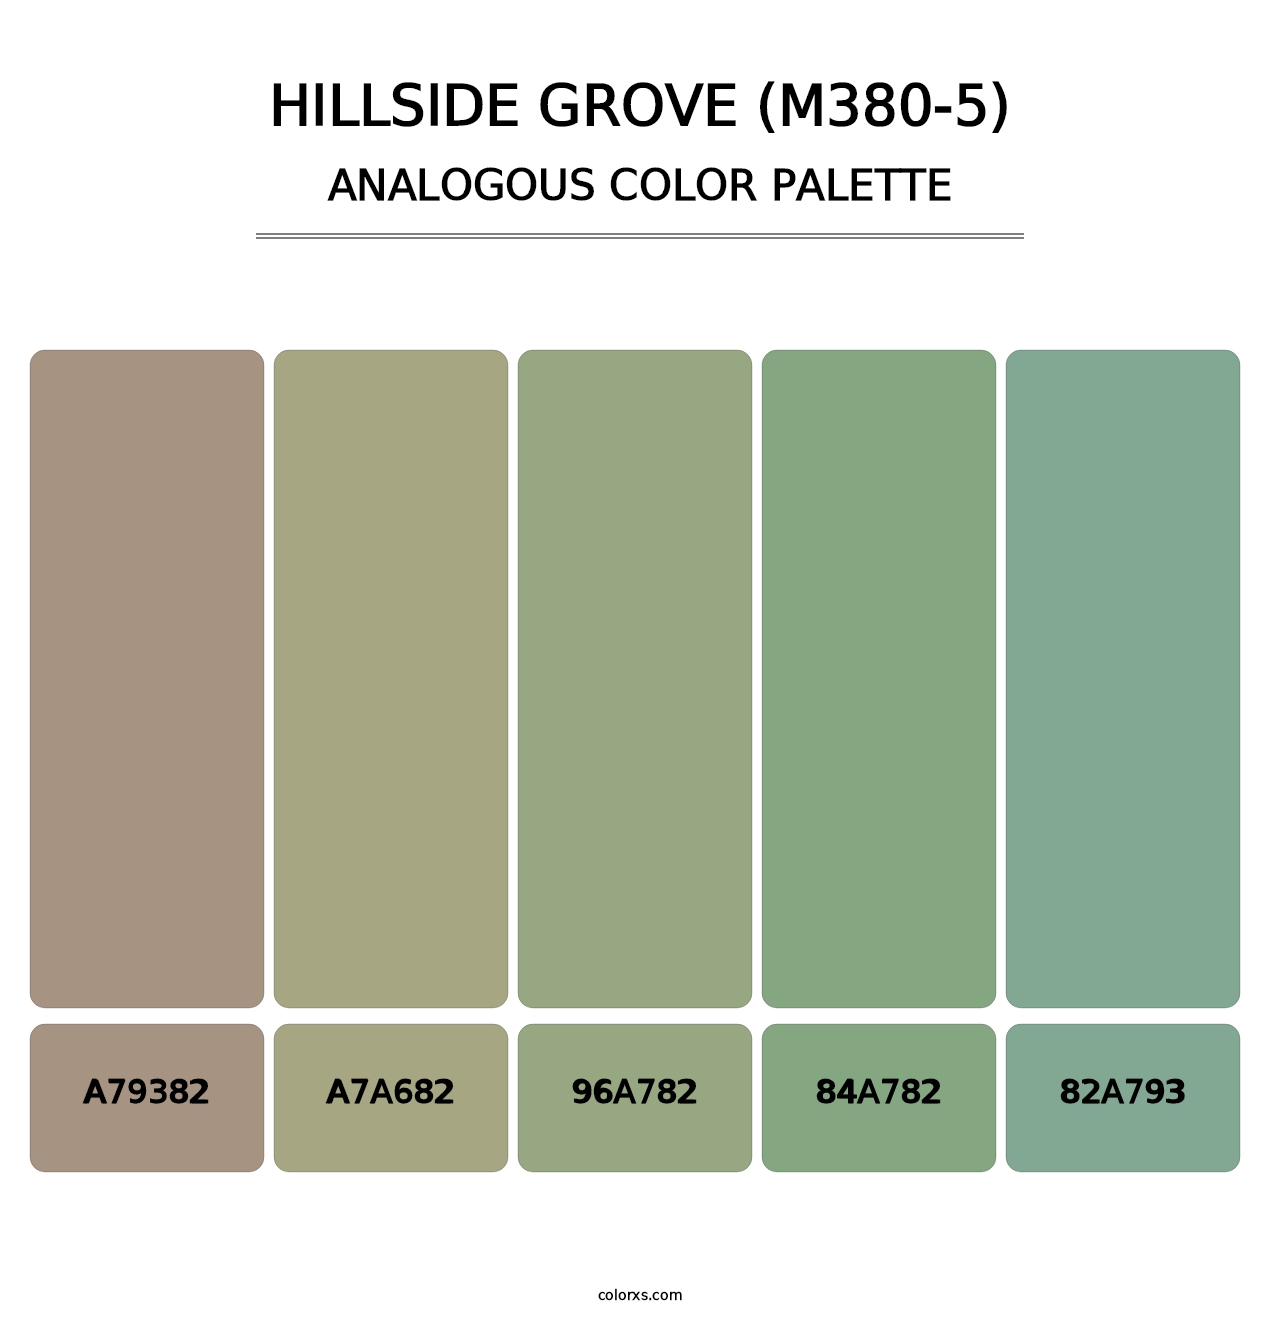 Hillside Grove (M380-5) - Analogous Color Palette